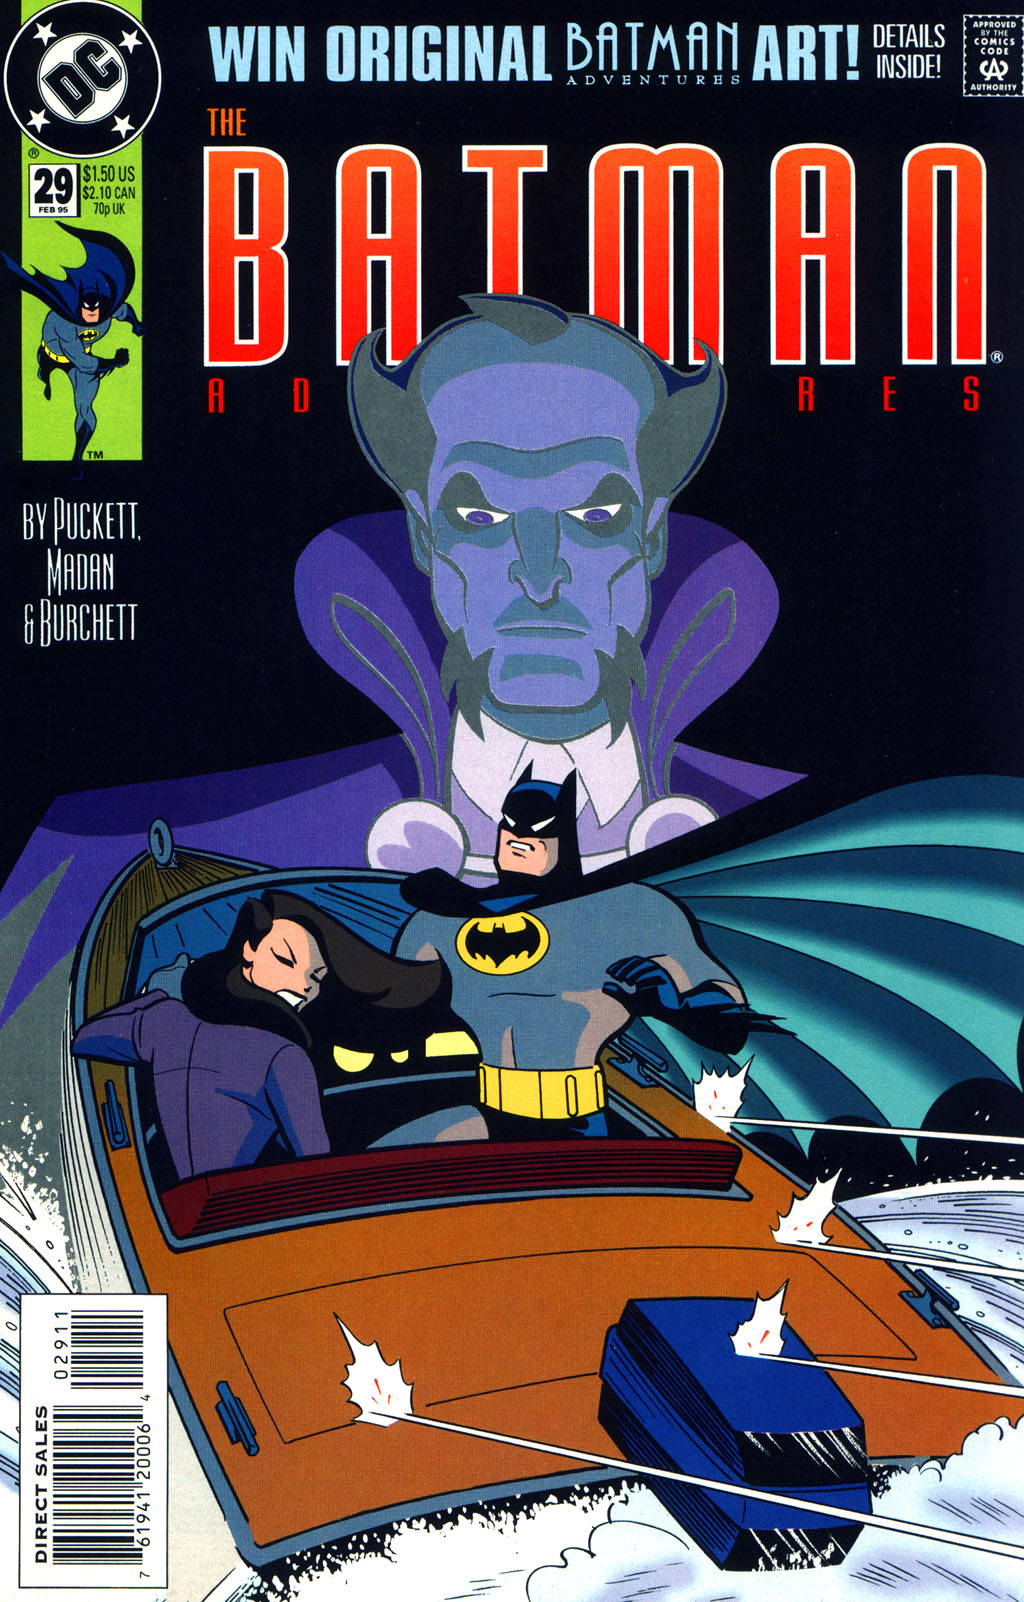 Read online The Batman Adventures comic -  Issue #29 - 1